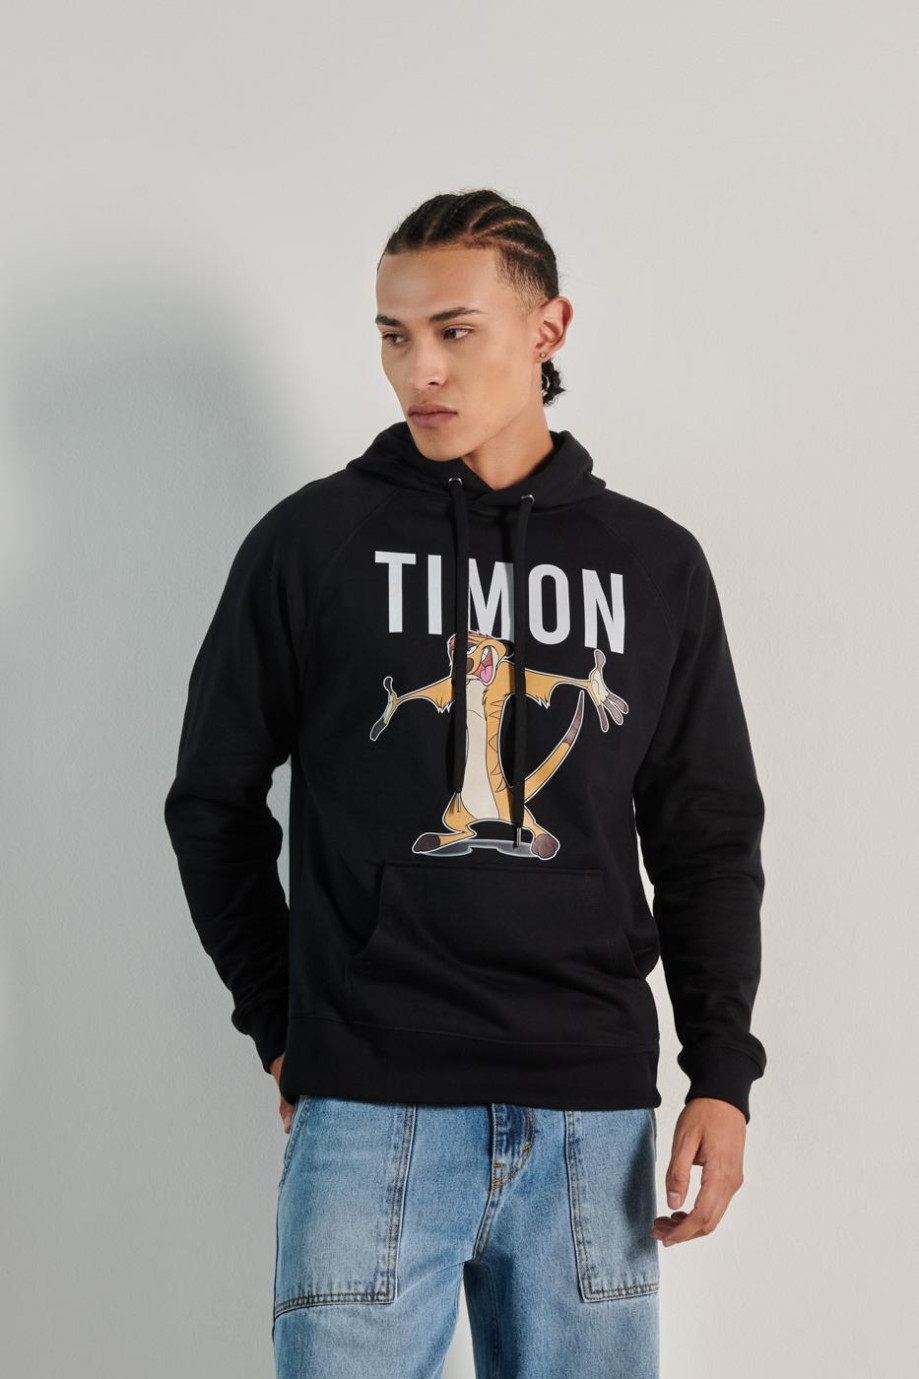 Buzo unicolor con capota, bolsillo y diseño de Timón